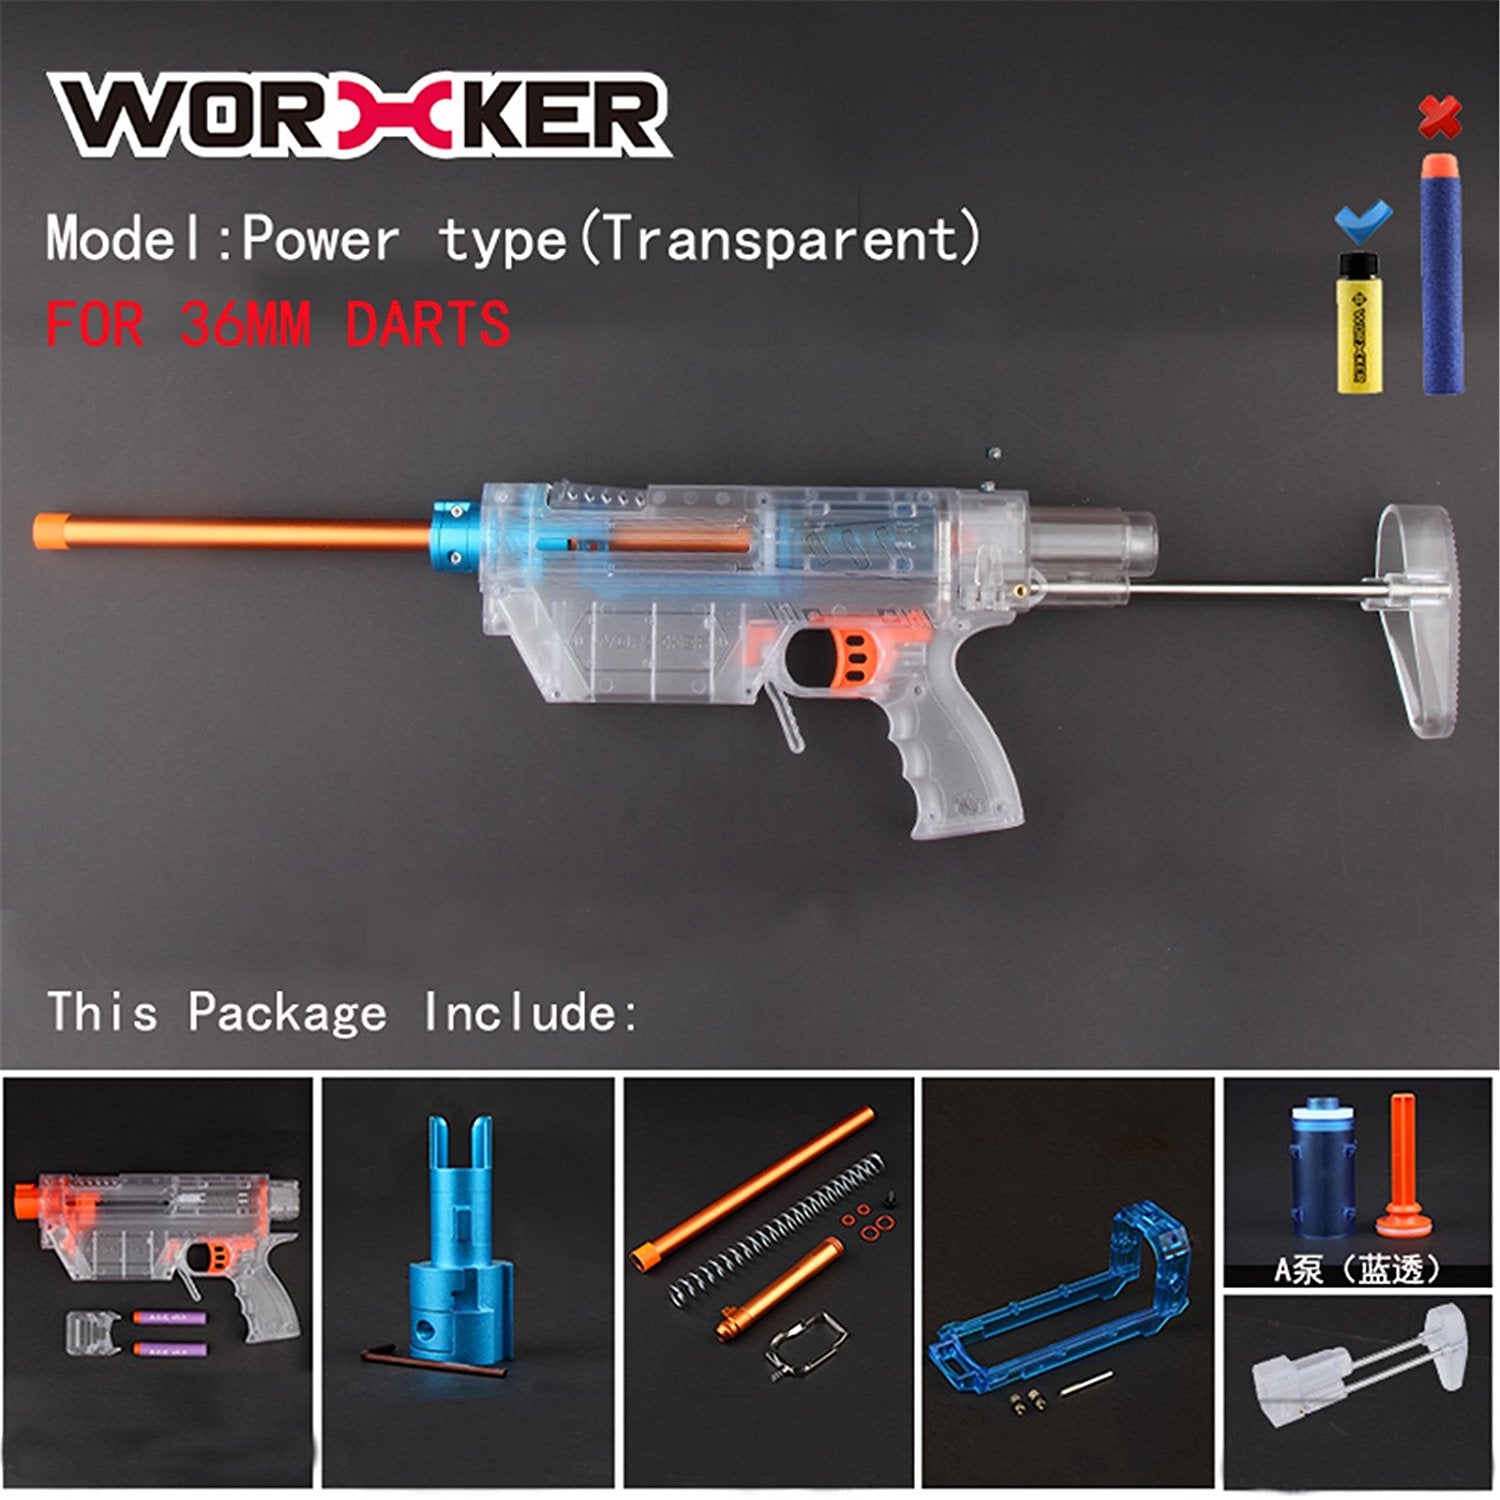 Worker Mod Prophecy-R Model Power Type DIY Short 36mm Dart Kits for Nerf Retaliator Color Transparent - BlasterMOD